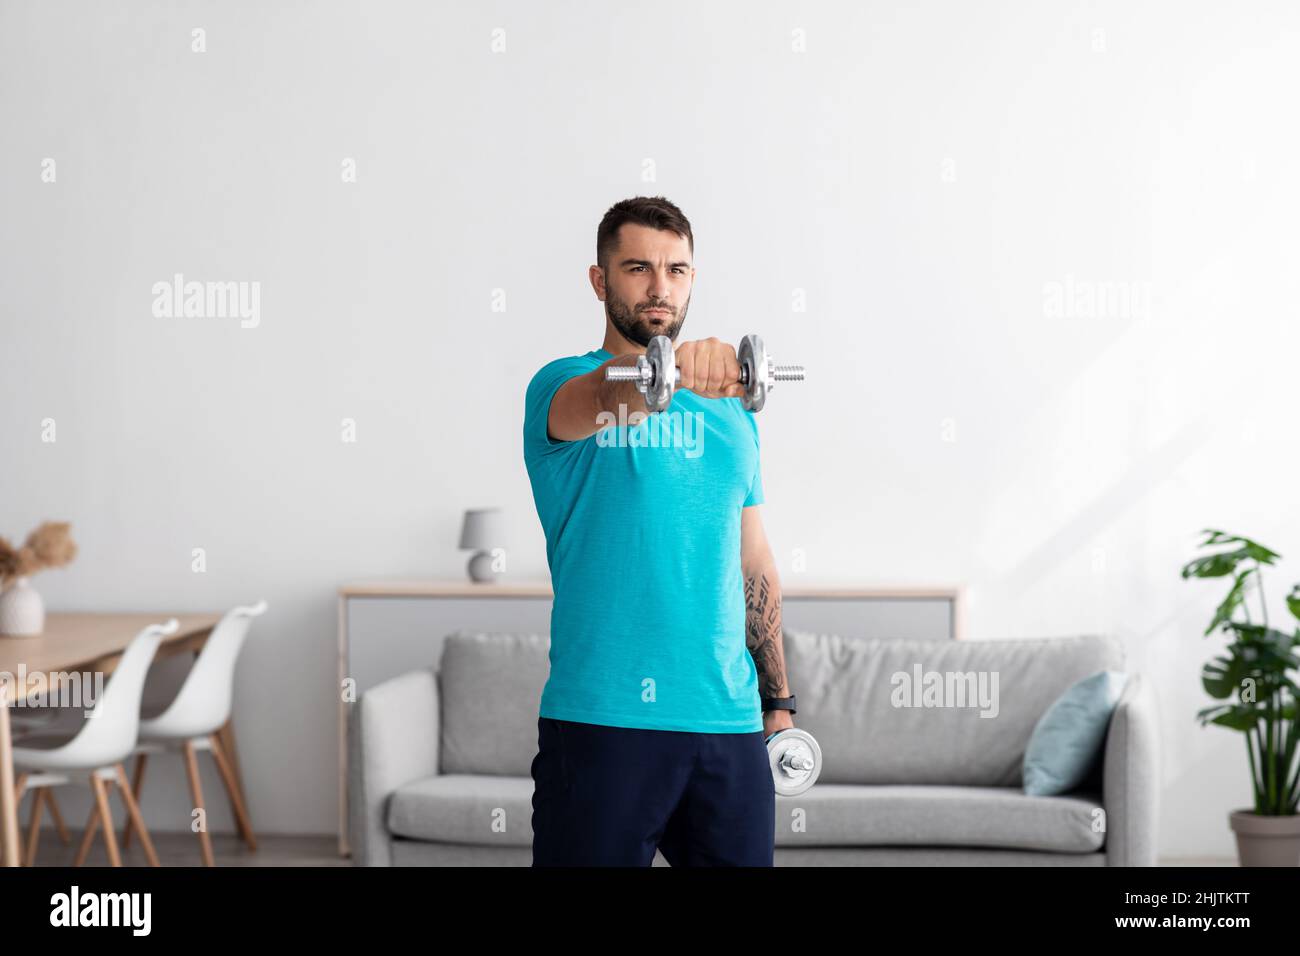 Serious millennial european man athlete in blue t-shirt raises dumbbell in minimalist living room interior Stock Photo